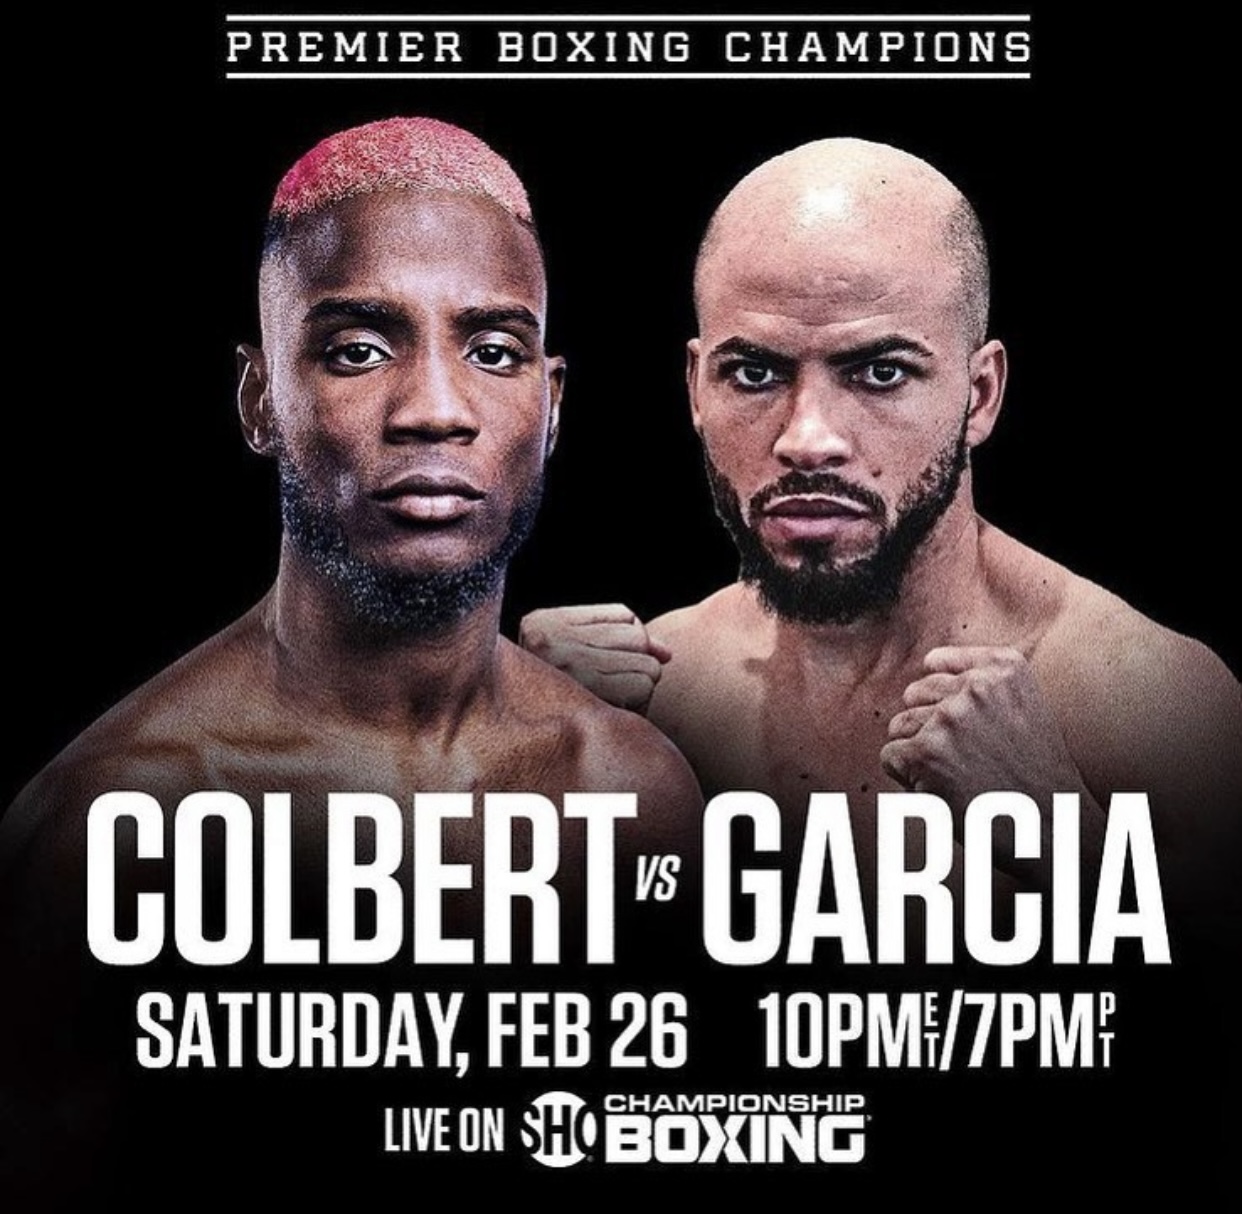 Colbert-Garcia to be WBA final eliminator